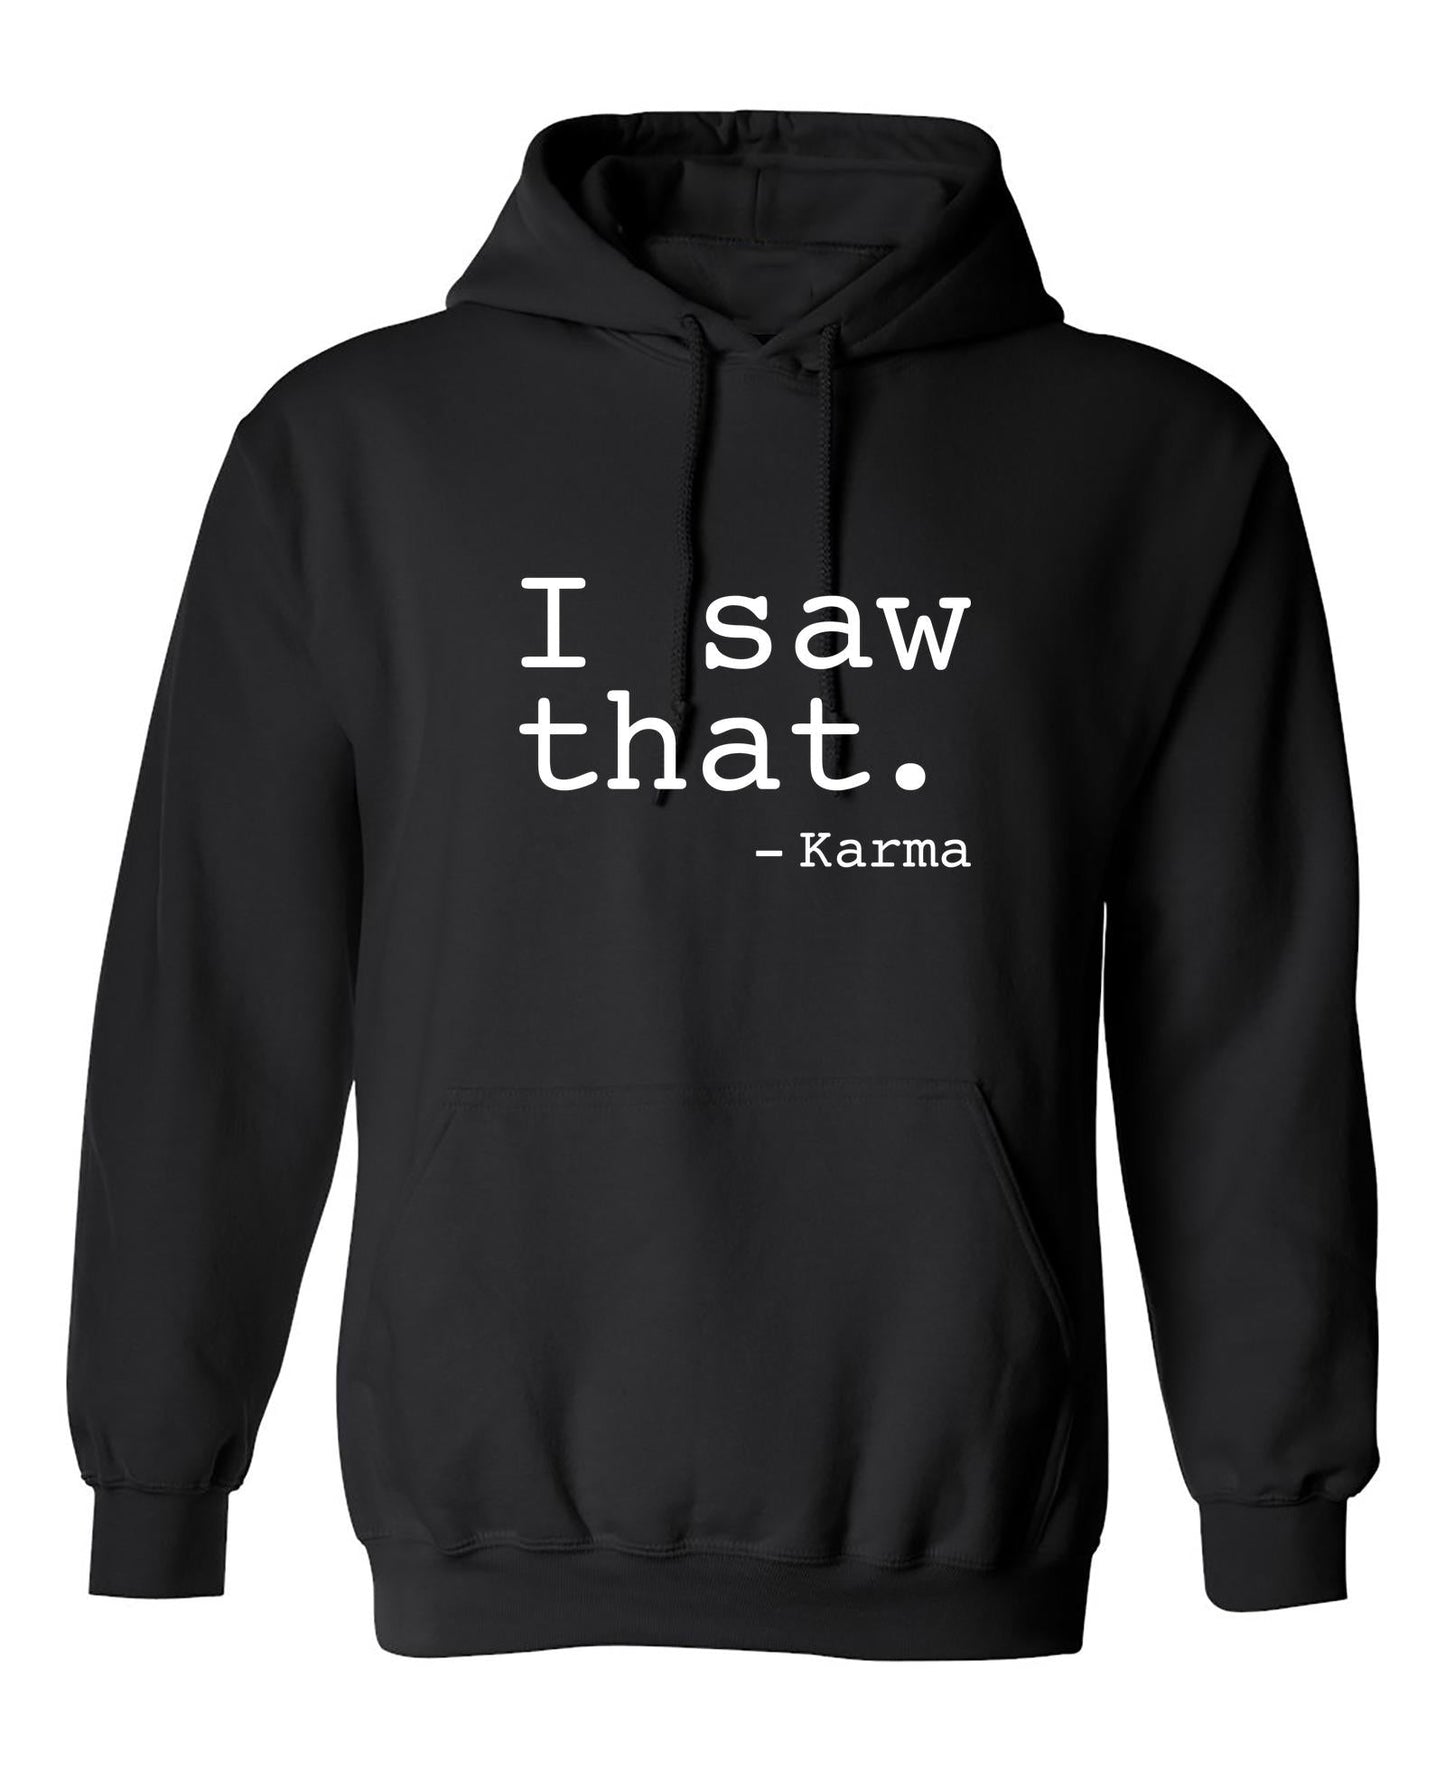 Funny T-Shirts design "I Saw That. - Karma"